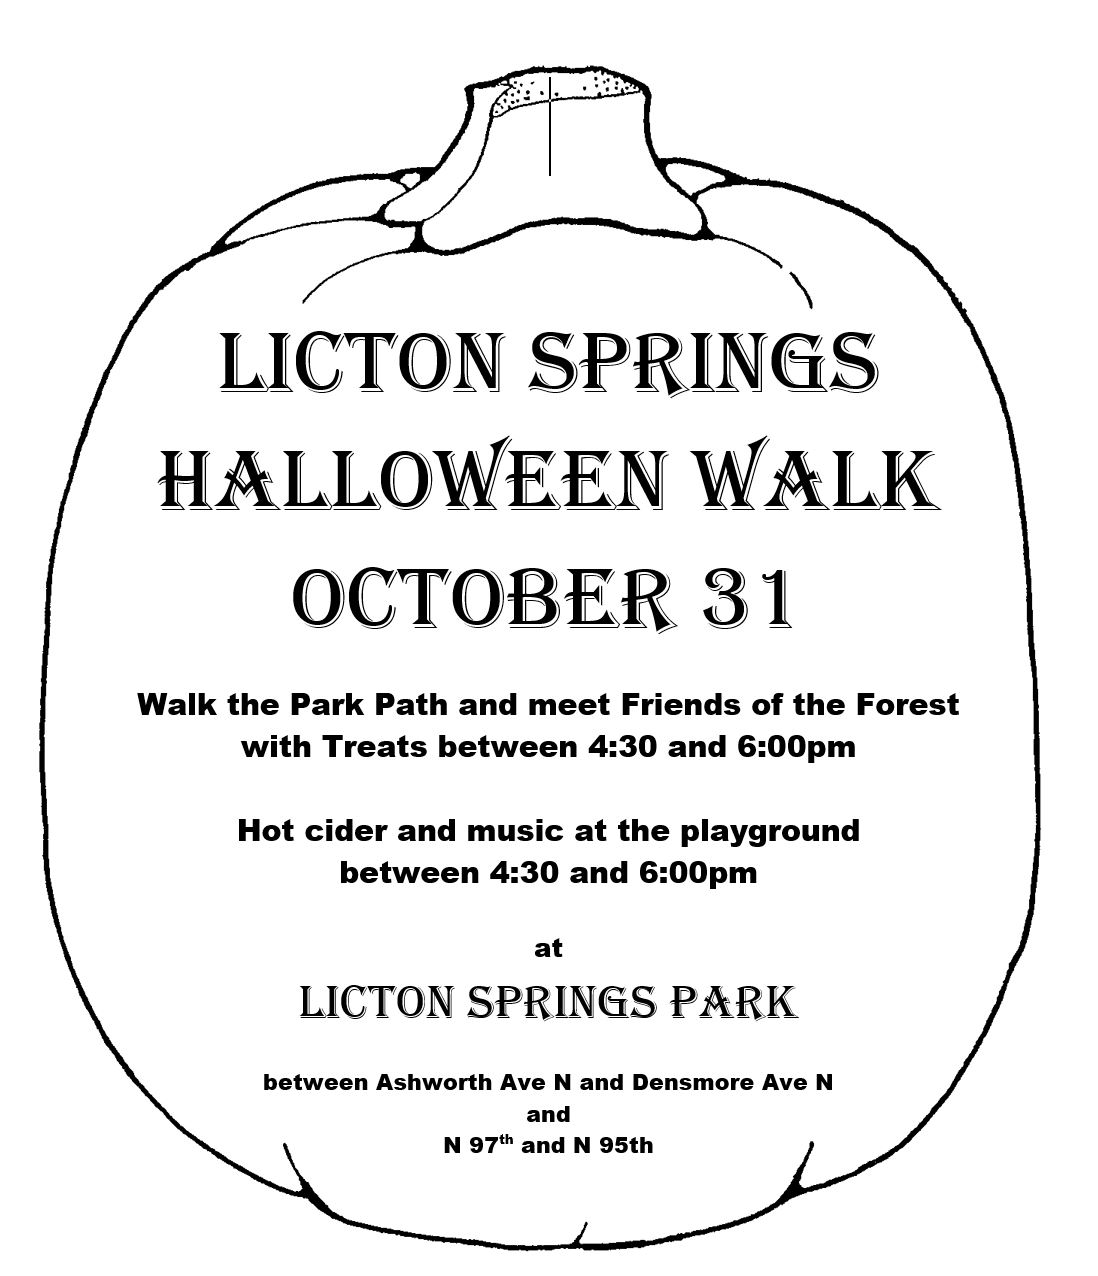 Licton Springs Halloween Walk